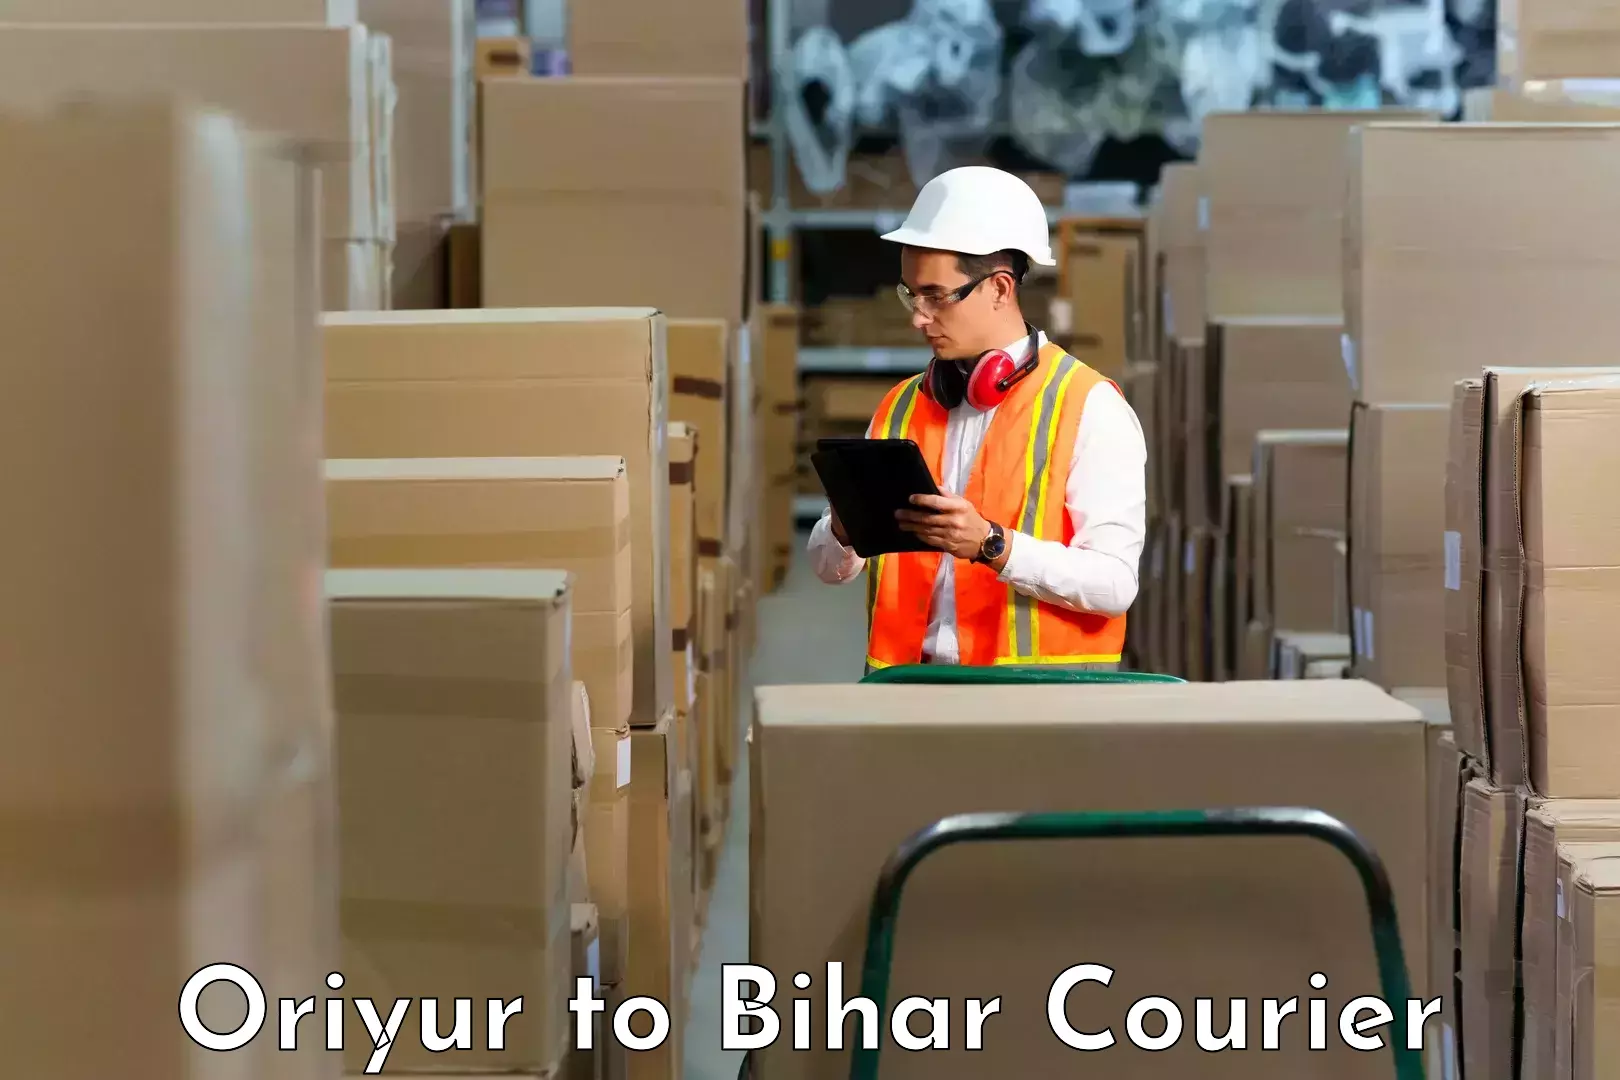 Personalized courier experiences Oriyur to Dhaka